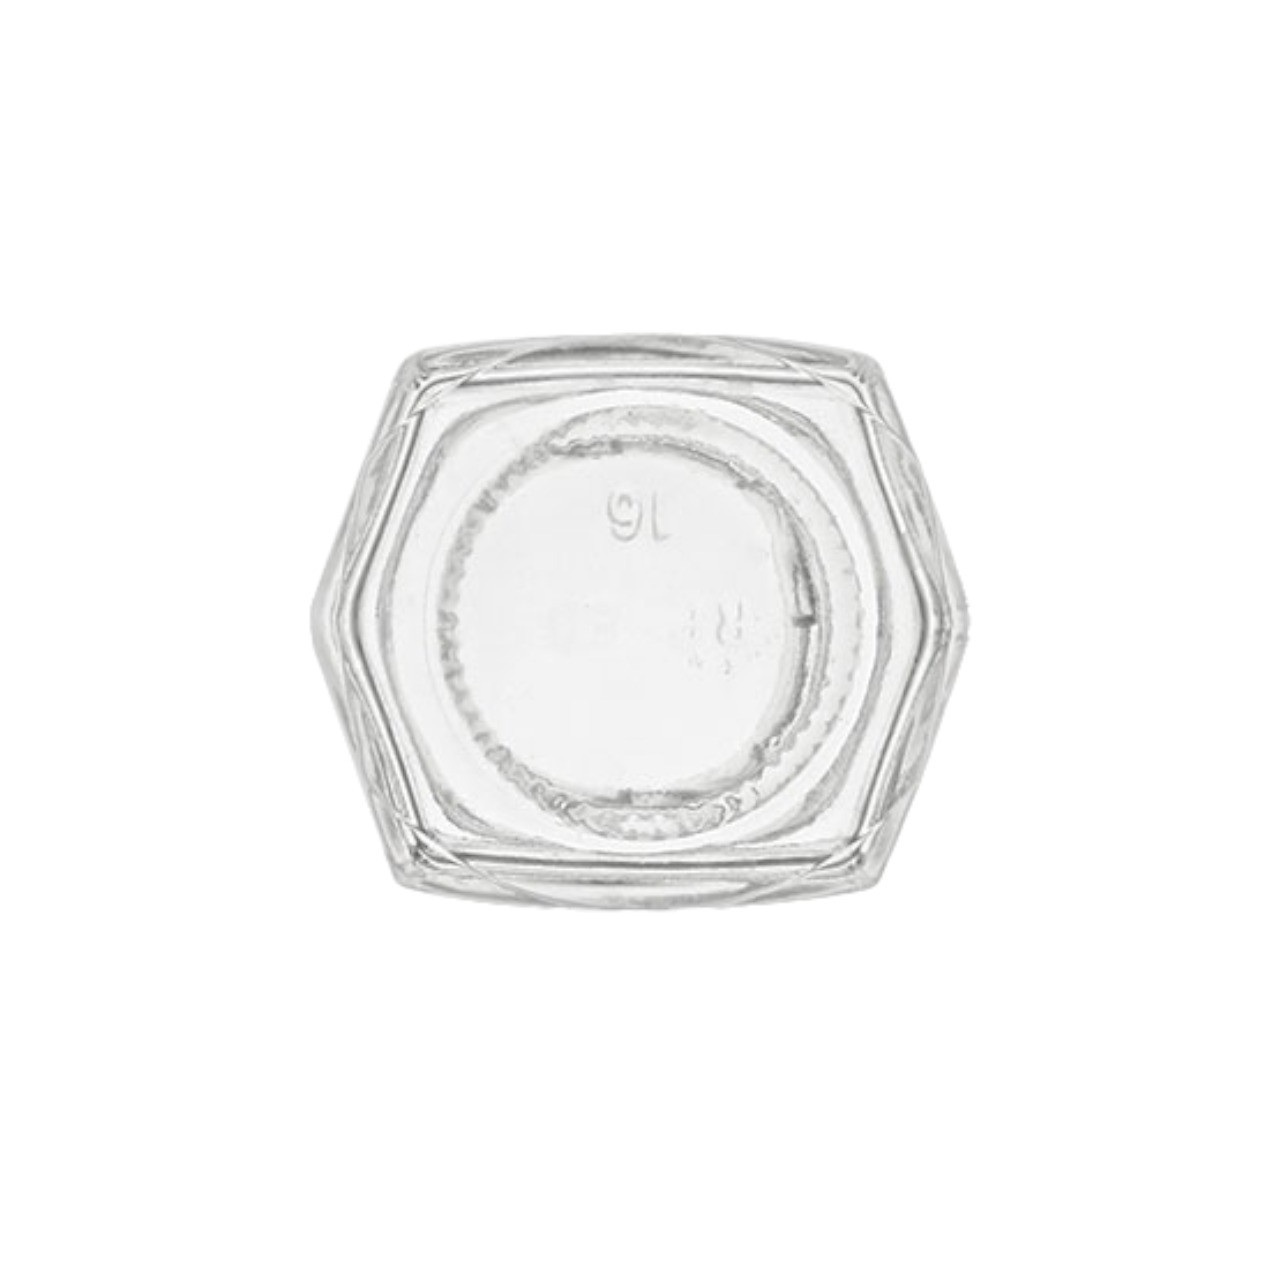 Oval Hexagon Glass Jar with White Lid, 12 oz